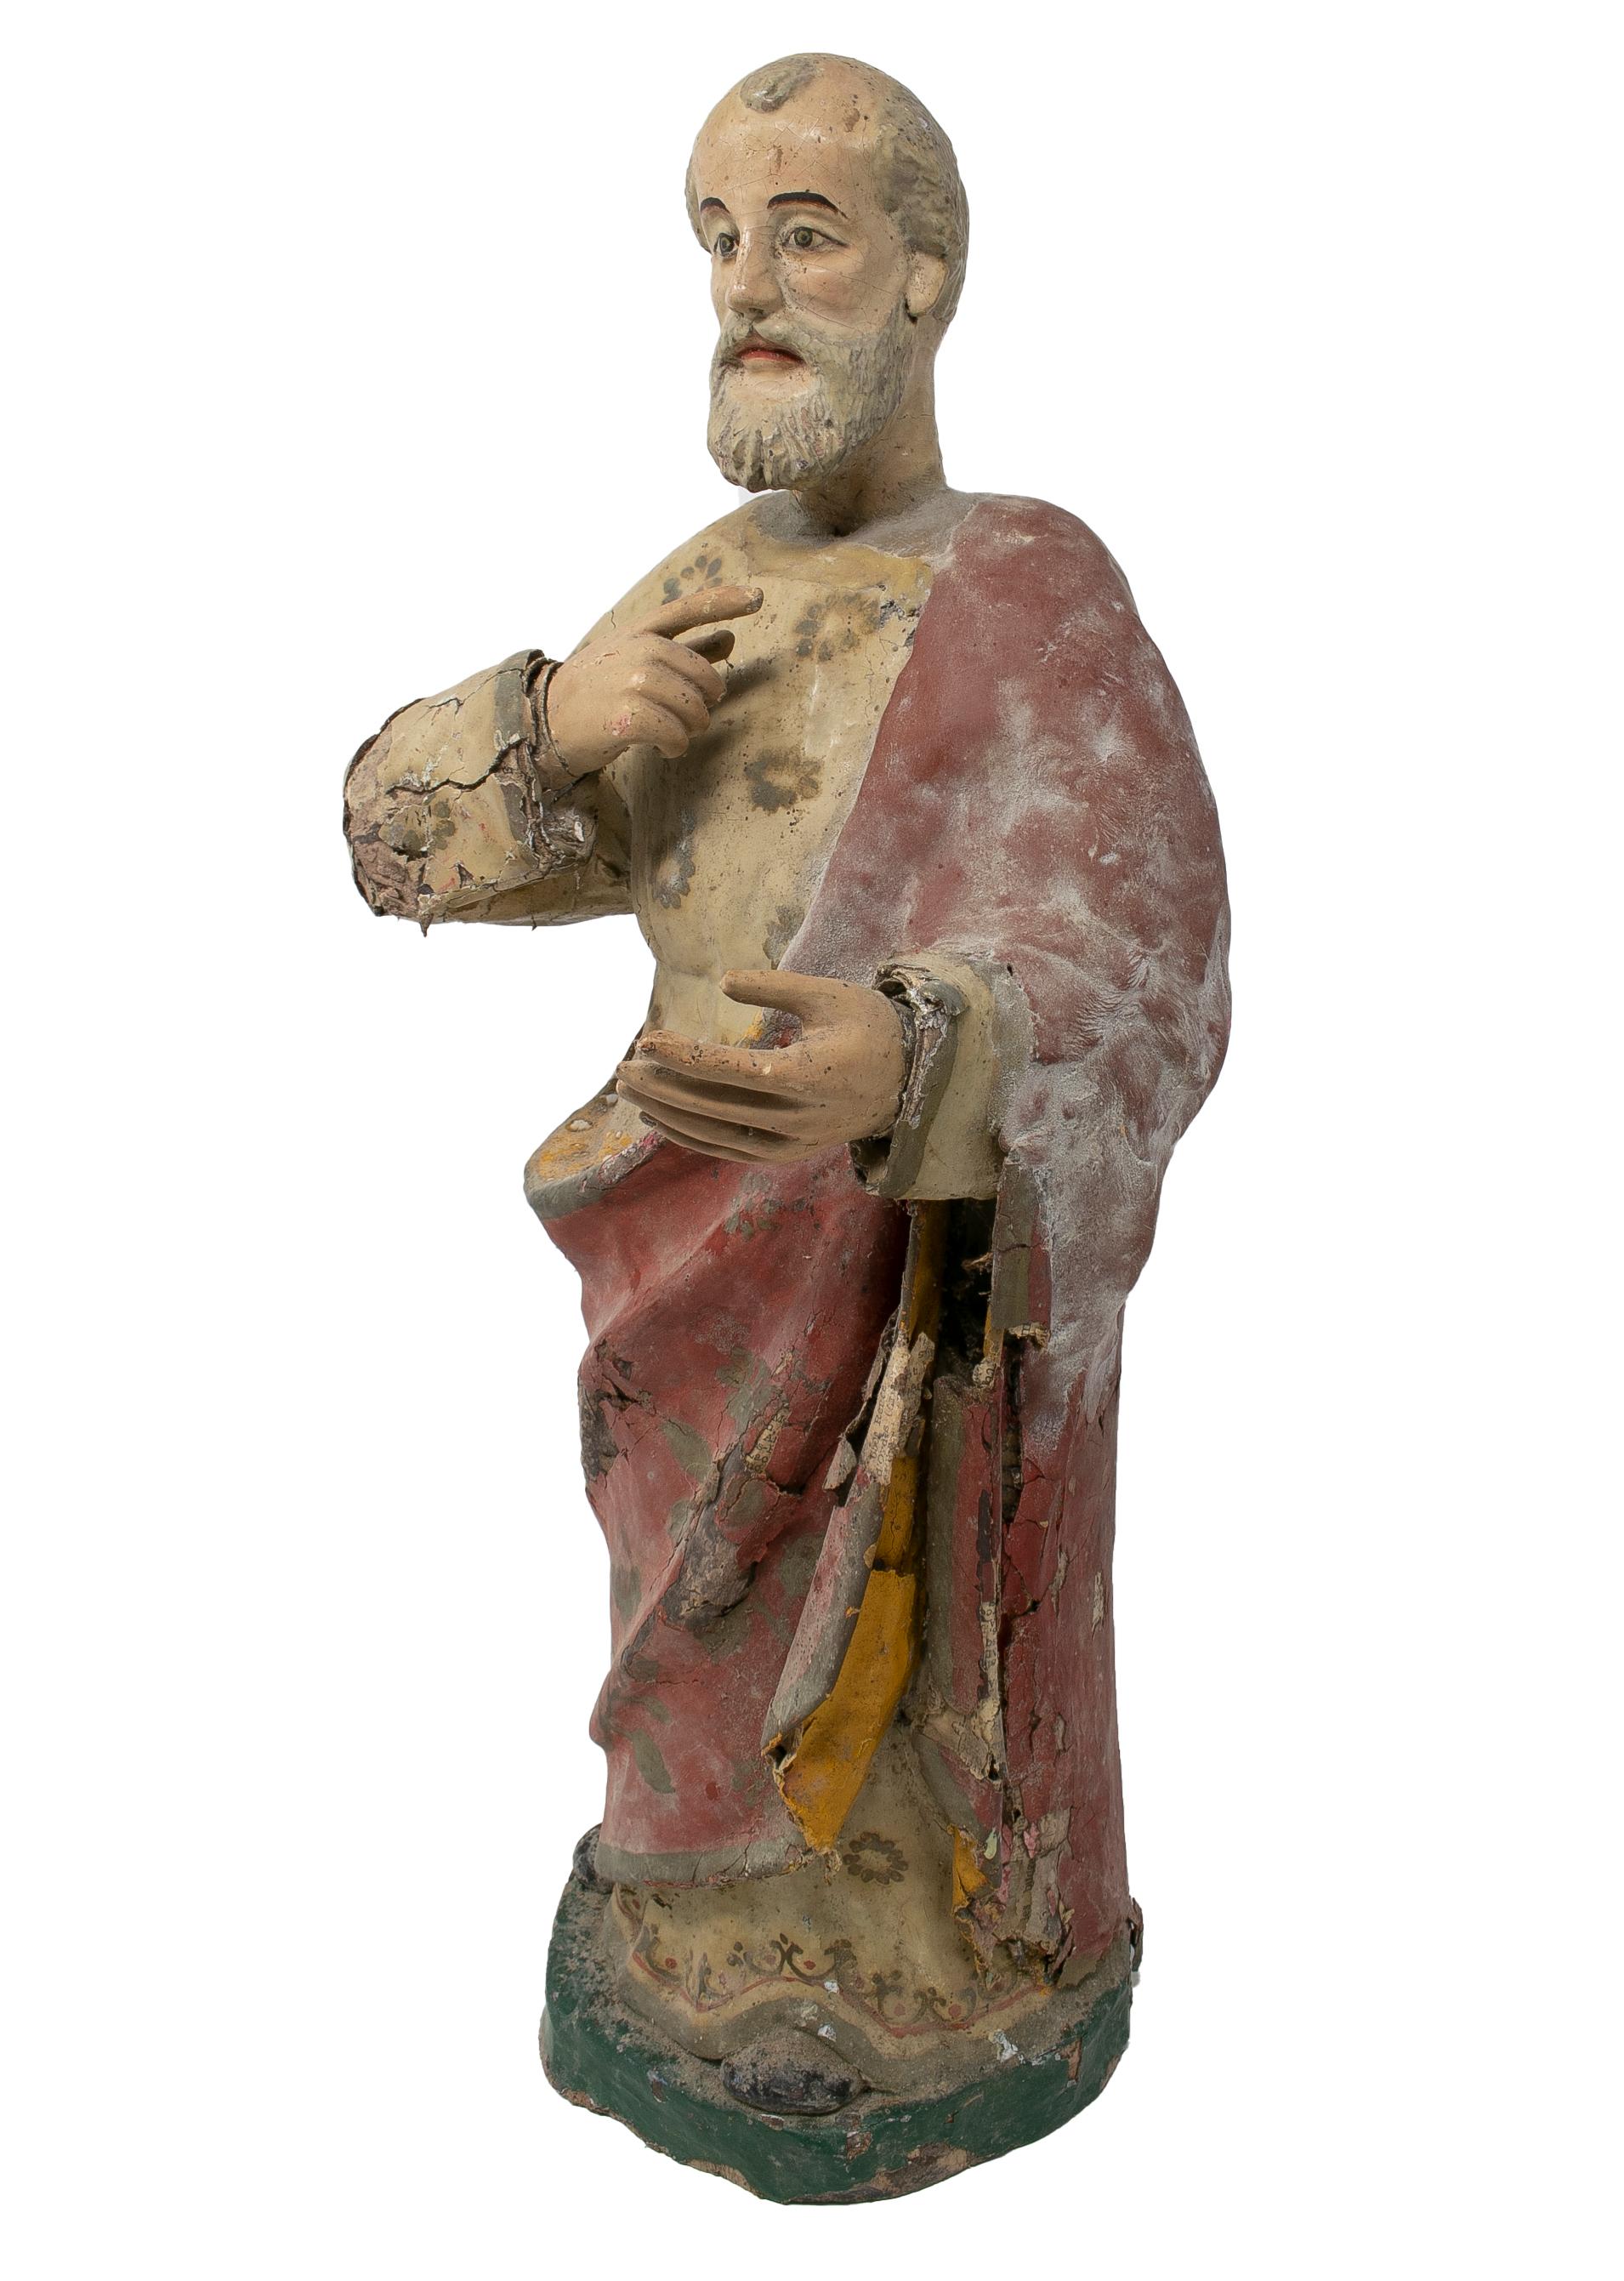 Mid-19th century Spanish painted polychrome figurative sculpture of a saint.

Needs restoration.